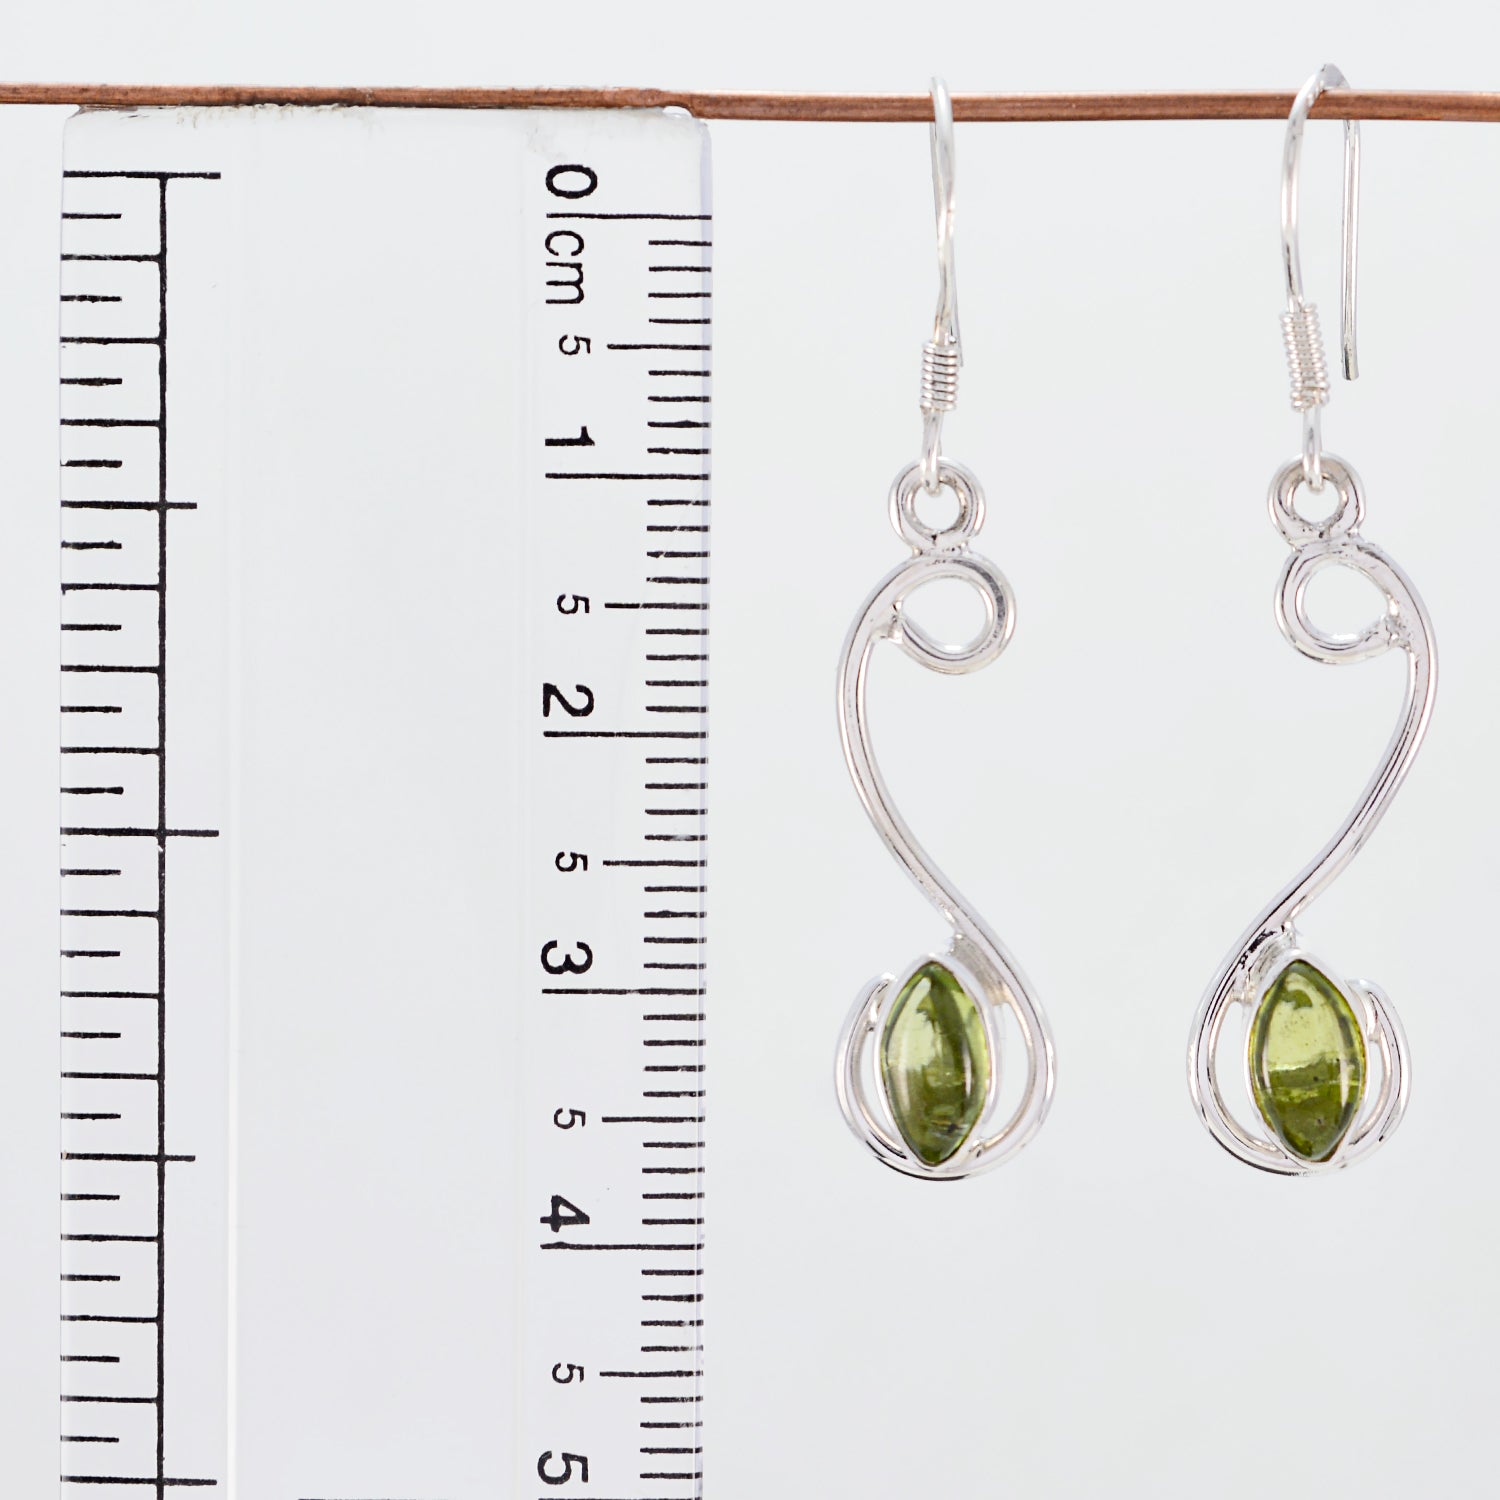 Riyo Natural Gemstone marquise Cabochon Green Peridot Silver Earrings daughter's day gift